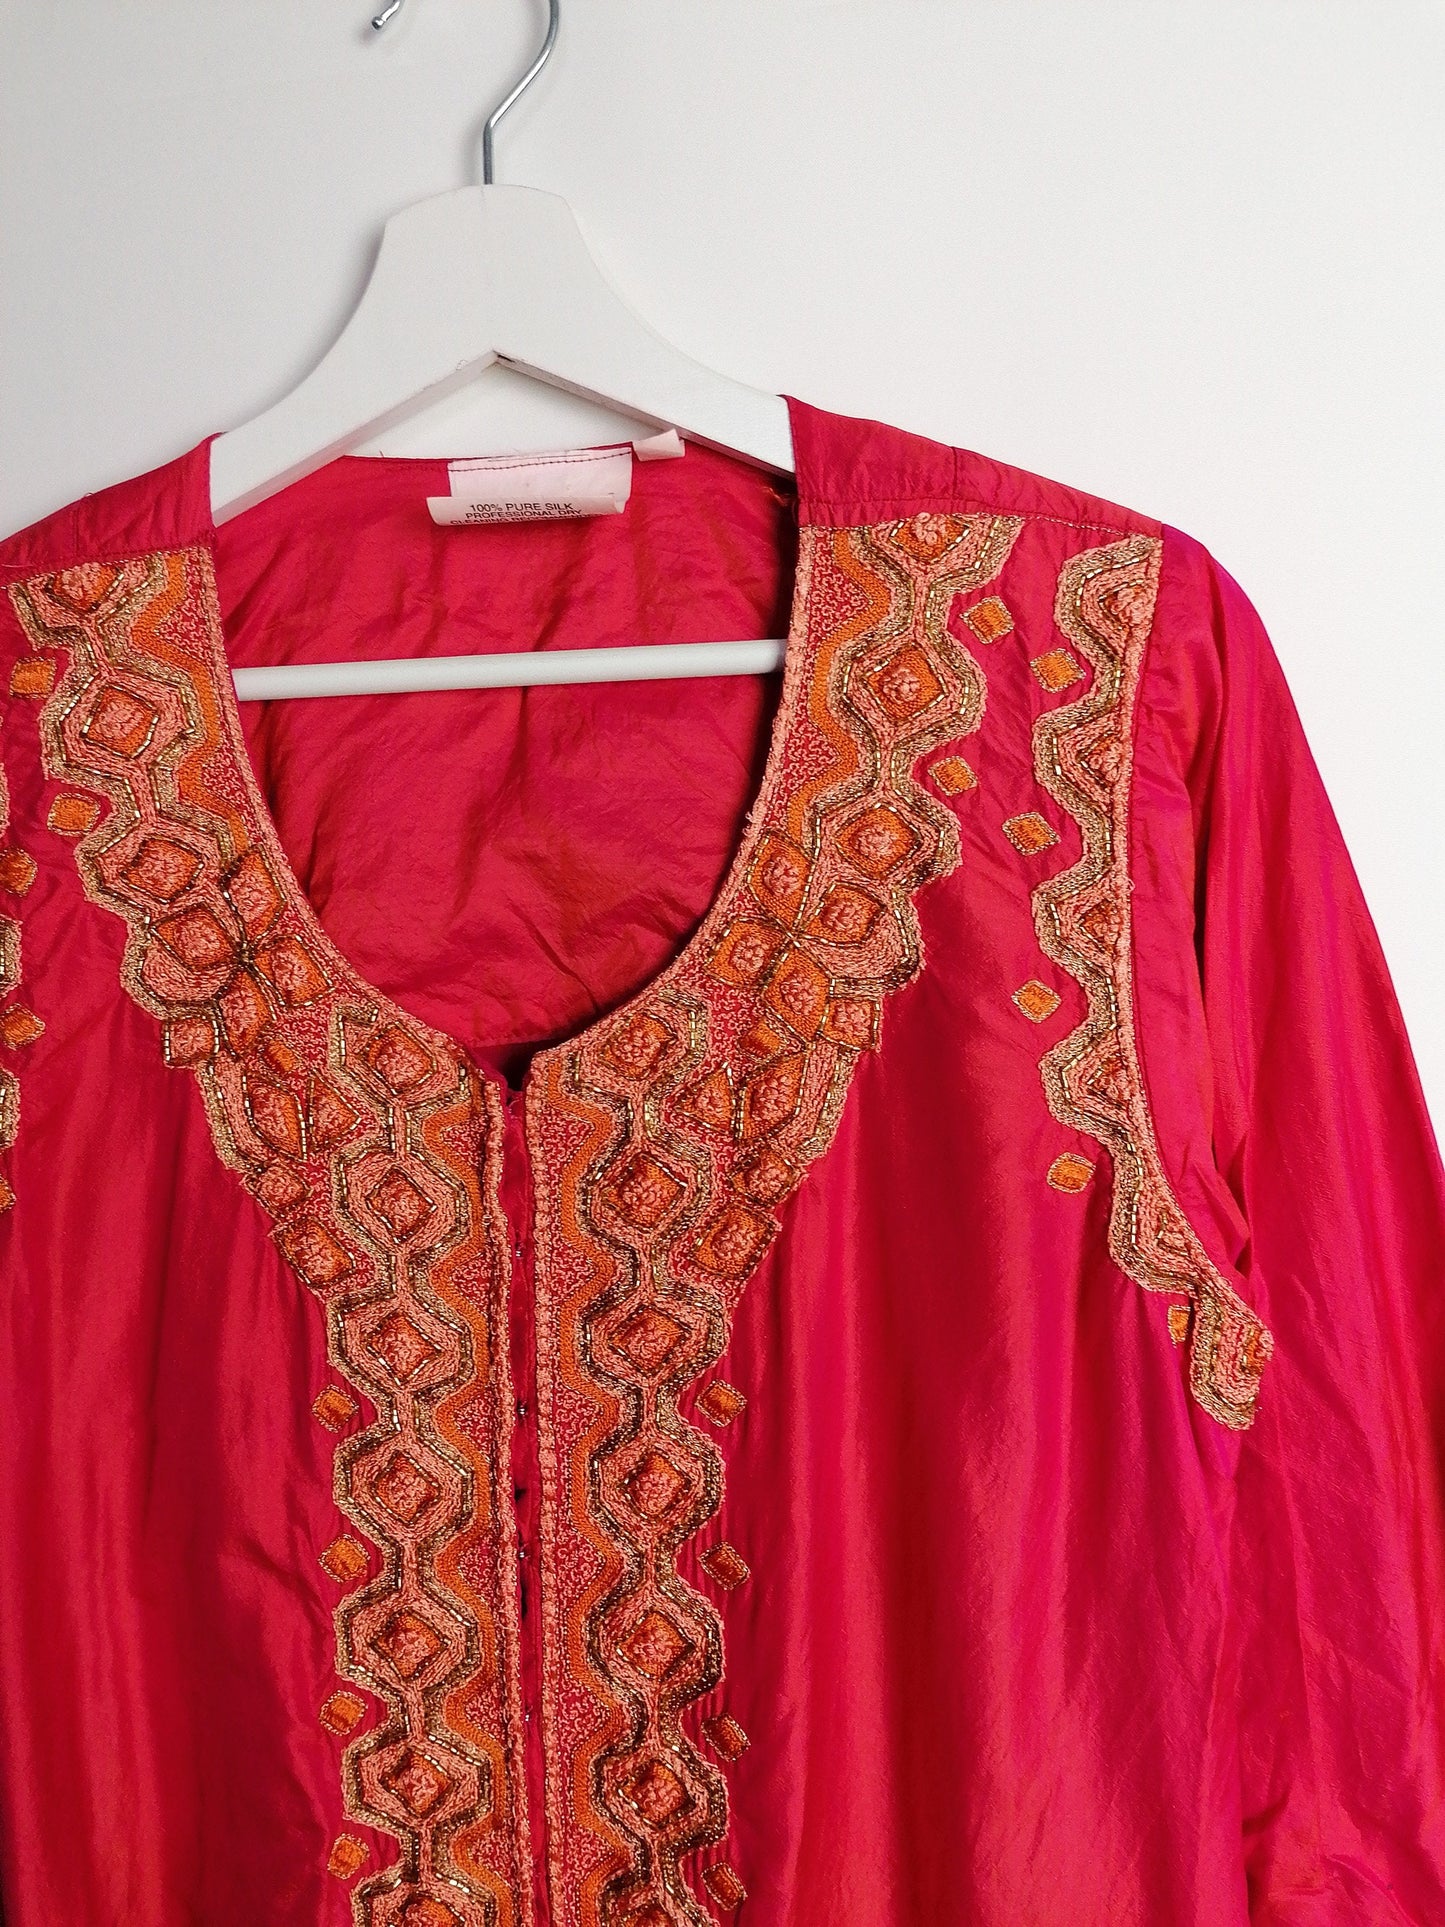 LOVELEEN Authentic Indian Silk Beaded Kurti Top/ Dress - size S-M